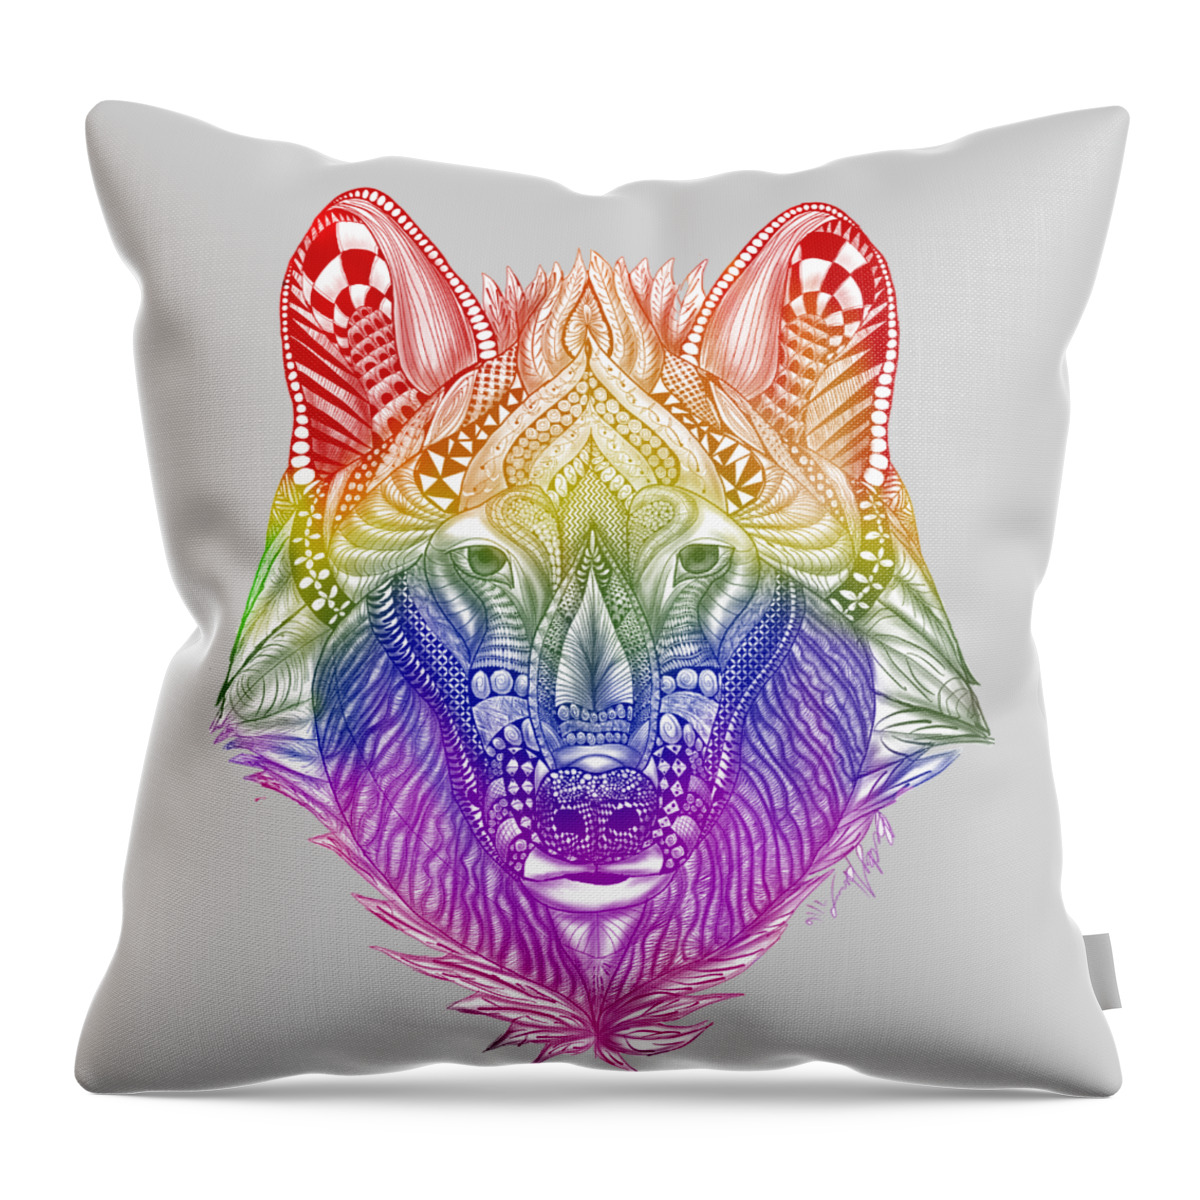 Zentangle Throw Pillow featuring the painting Zentangle Inspired Art- Rainbow Wolf by Becky Herrera